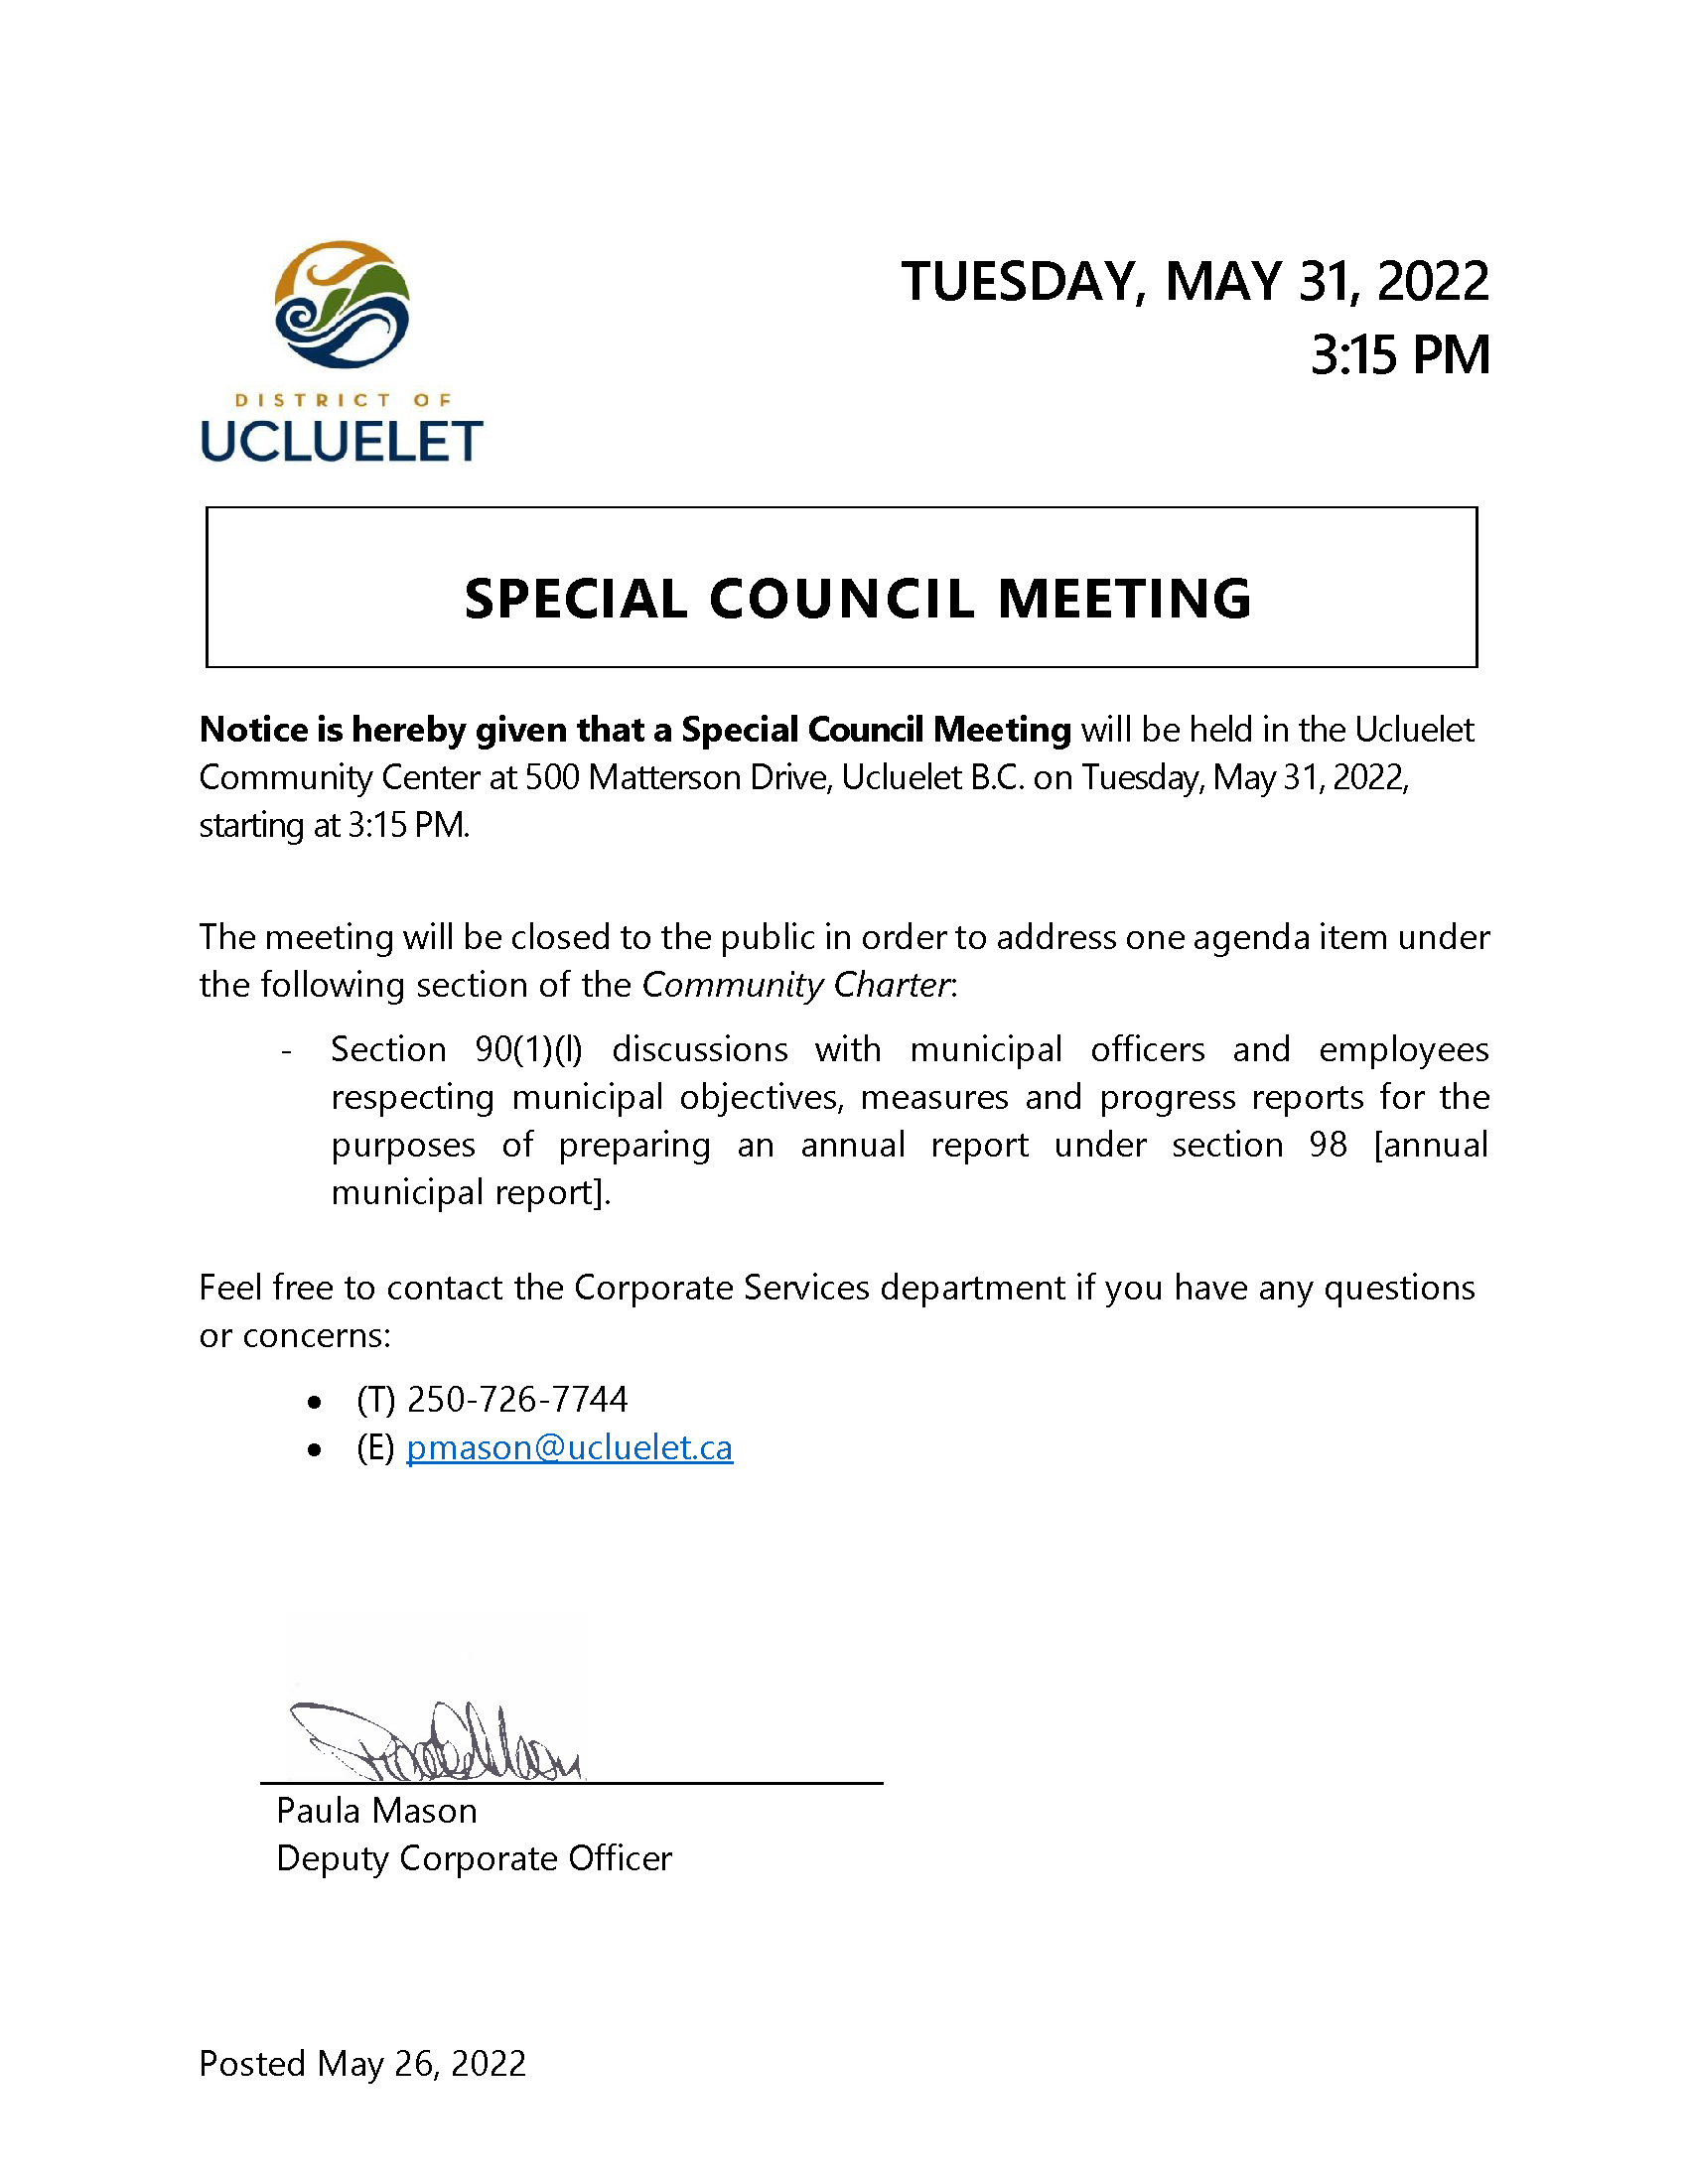 2022 05 31 Special Meeting Notice